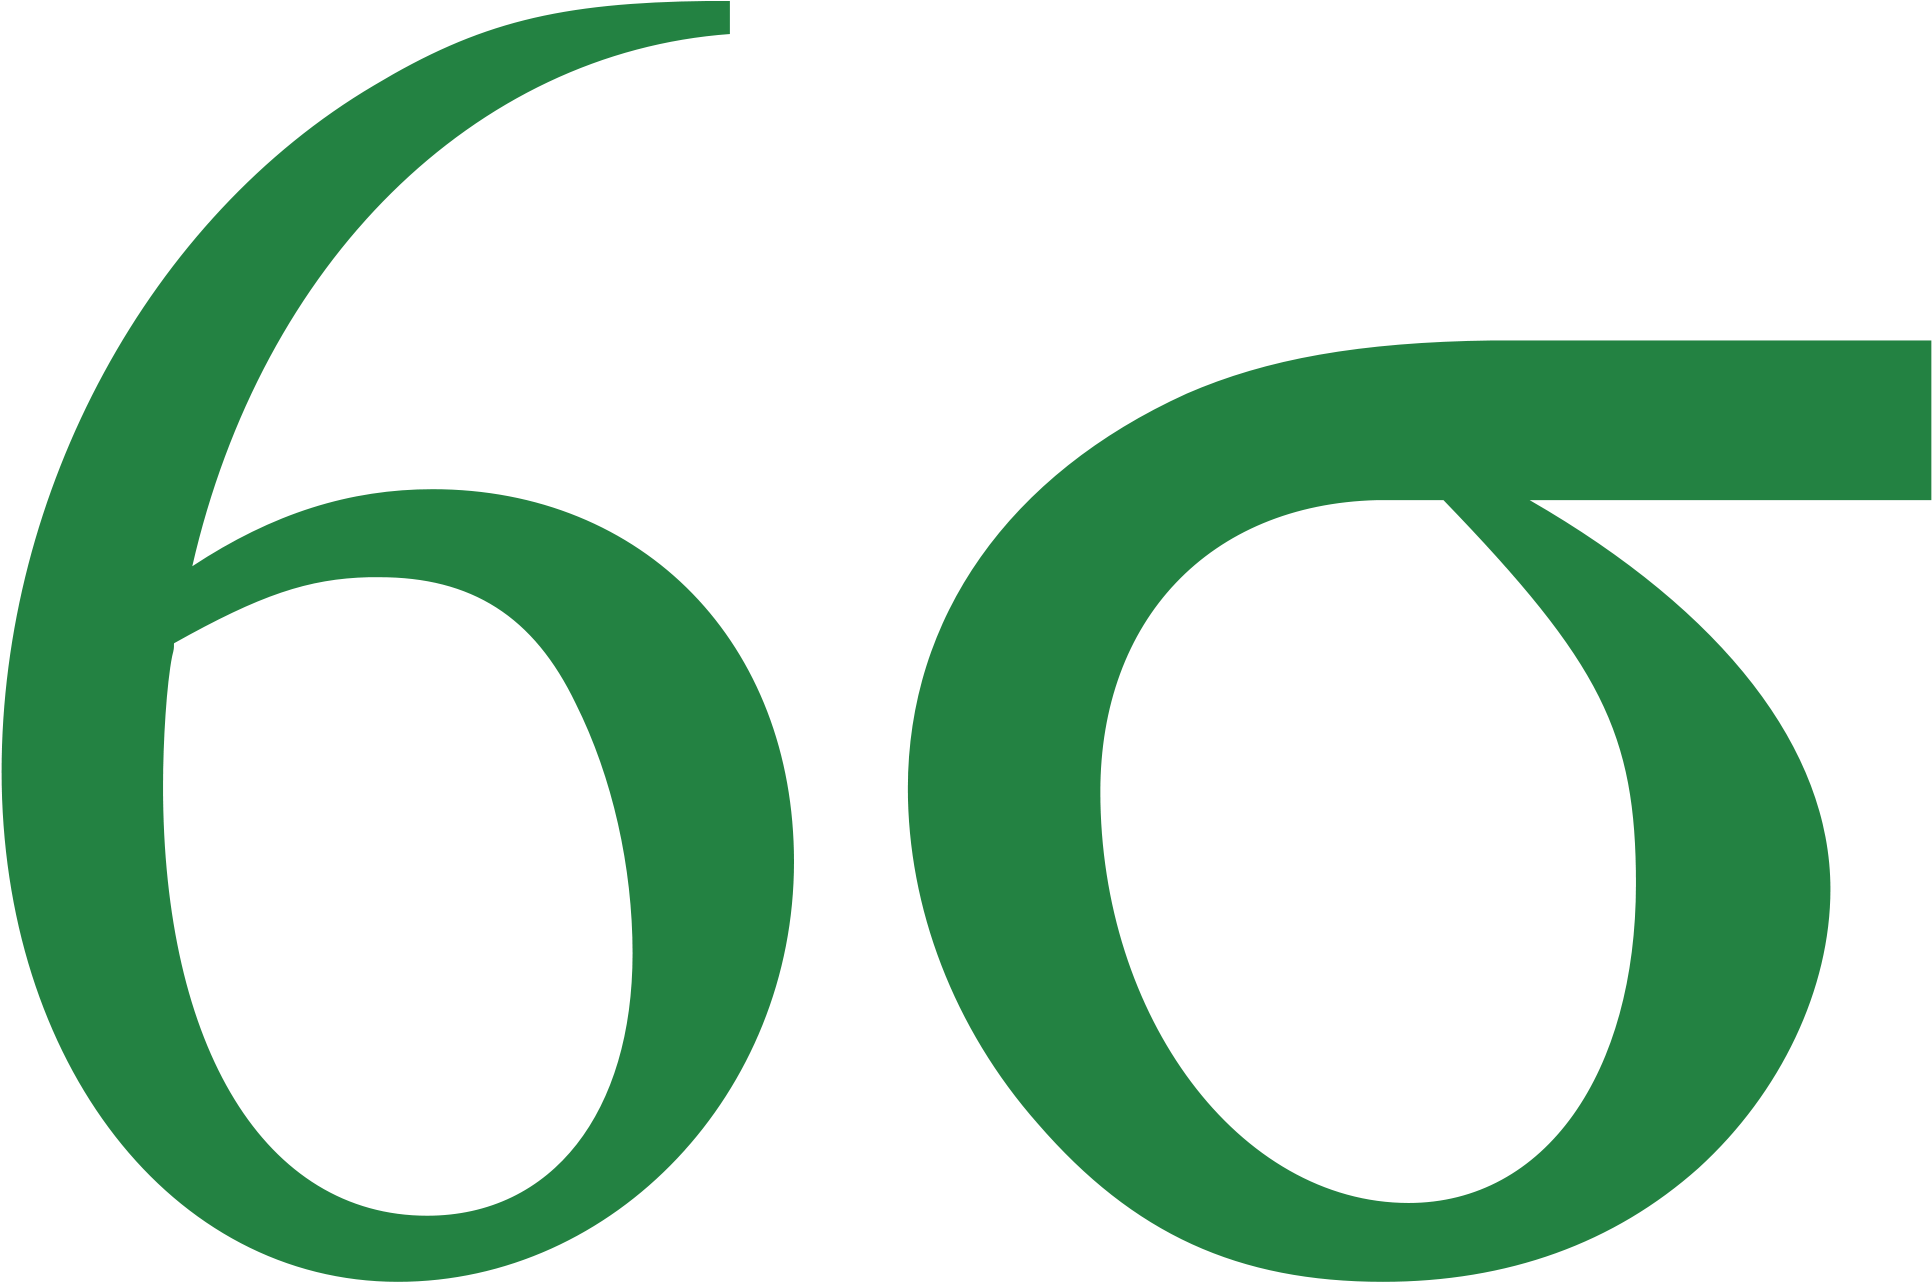 6 Sigma Green Belt. Green Belt Six Sigma. Сигма лого. Green Belt лого. Сигма зеленый